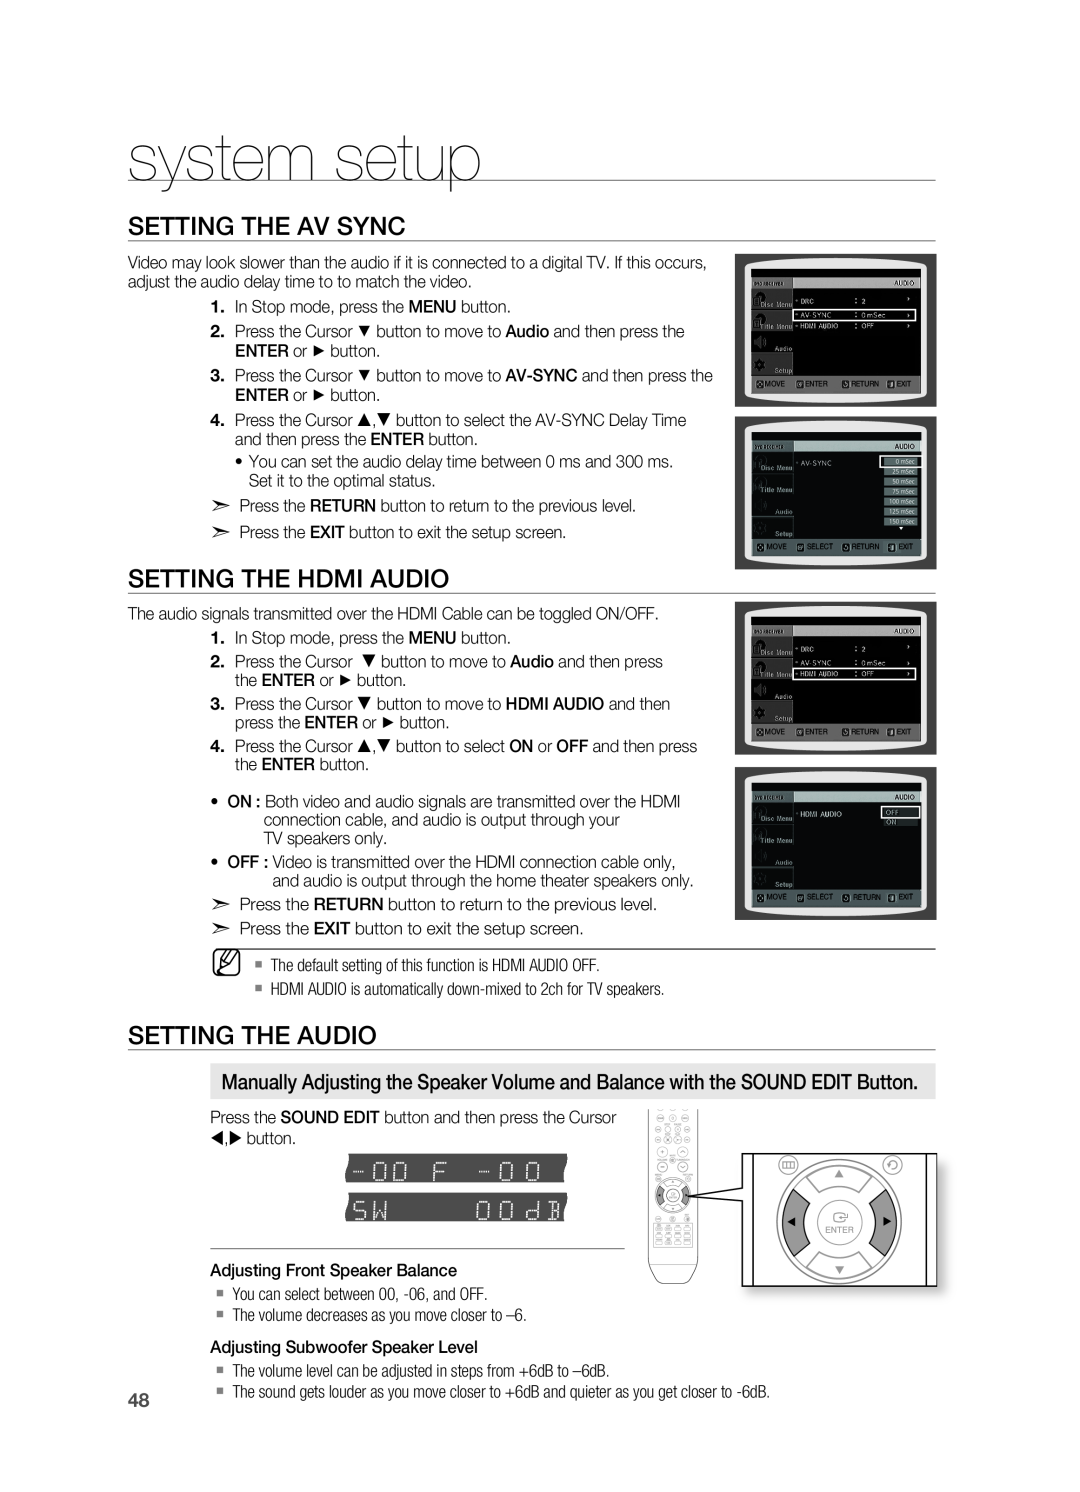 Samsung HT-X810 user manual Setting The Av Sync, Setting The Hdmi Audio, Setting The Audio, system setup 